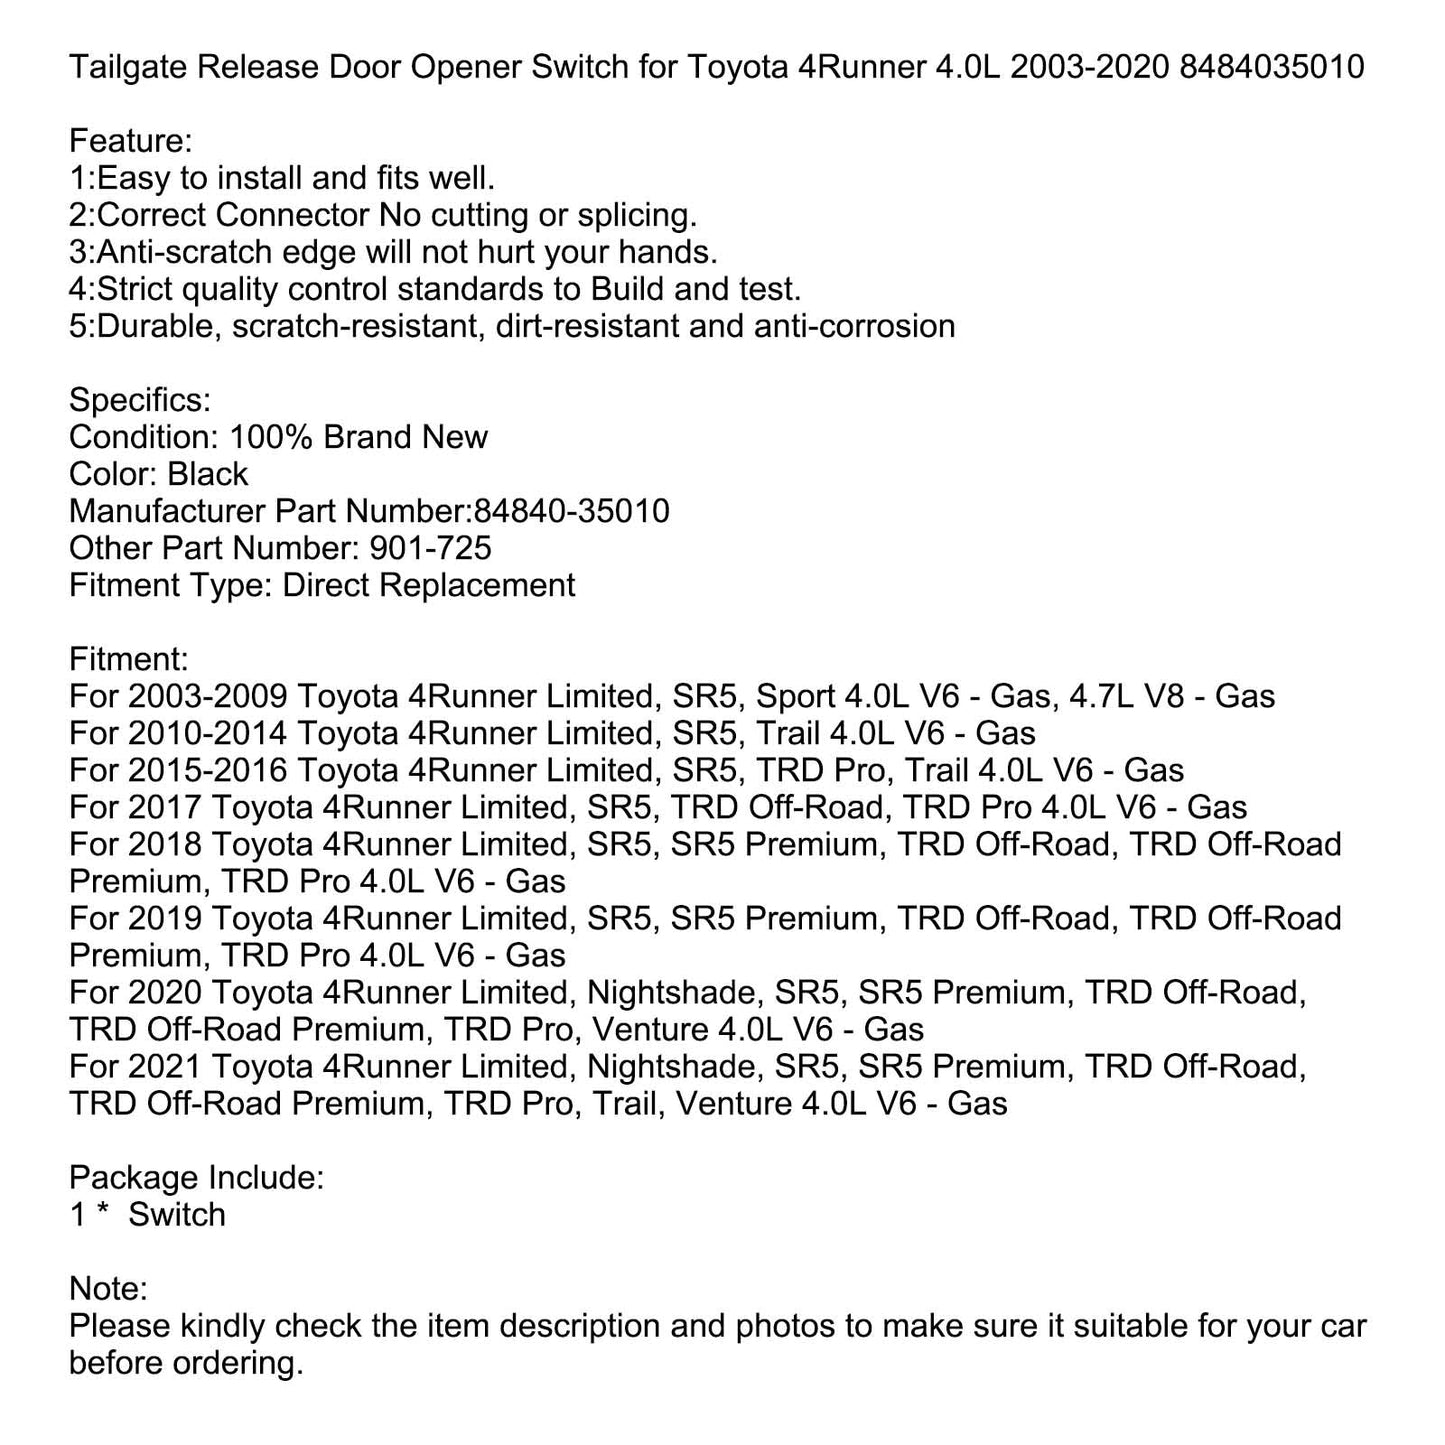 Tailgate Release Door Opener Switch for Toyota 4Runner 4.0L 2003-2020 8484035010